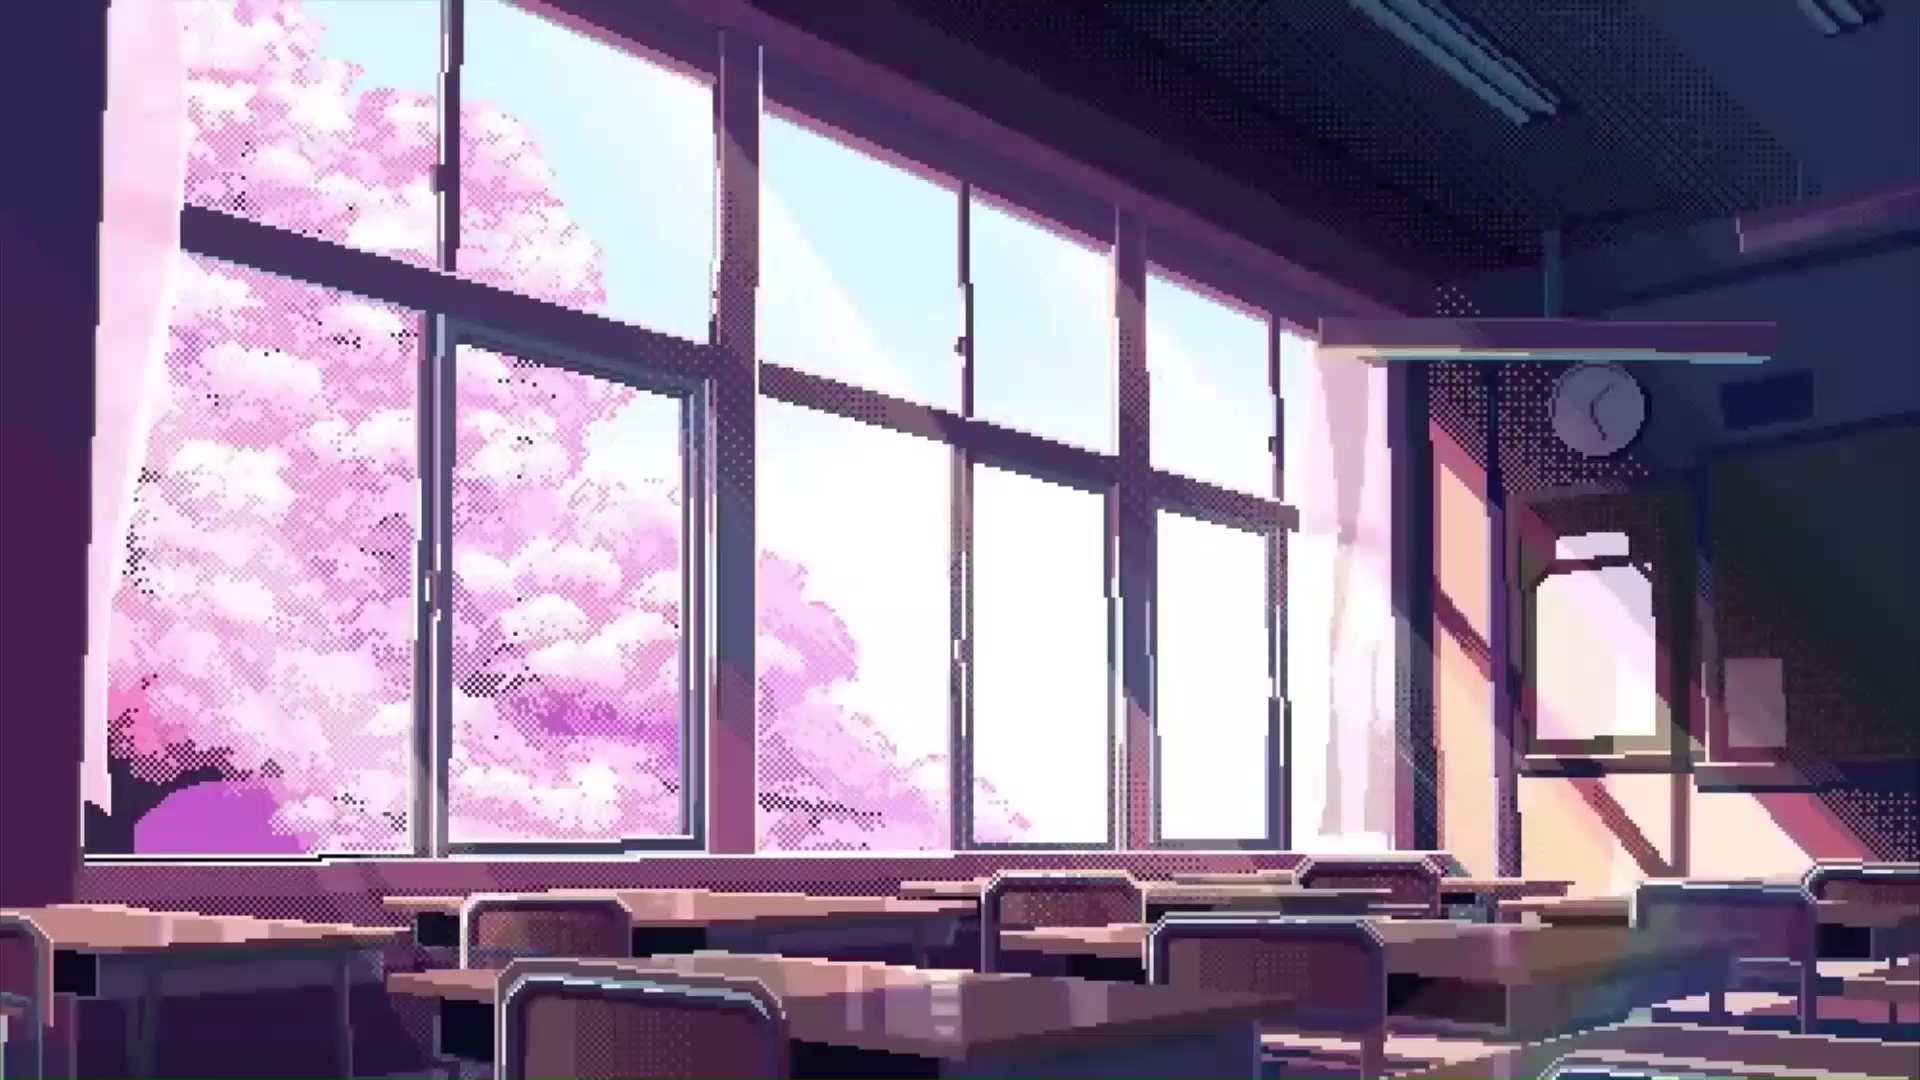 18 Anime School Building Wallpapers  WallpaperSafari